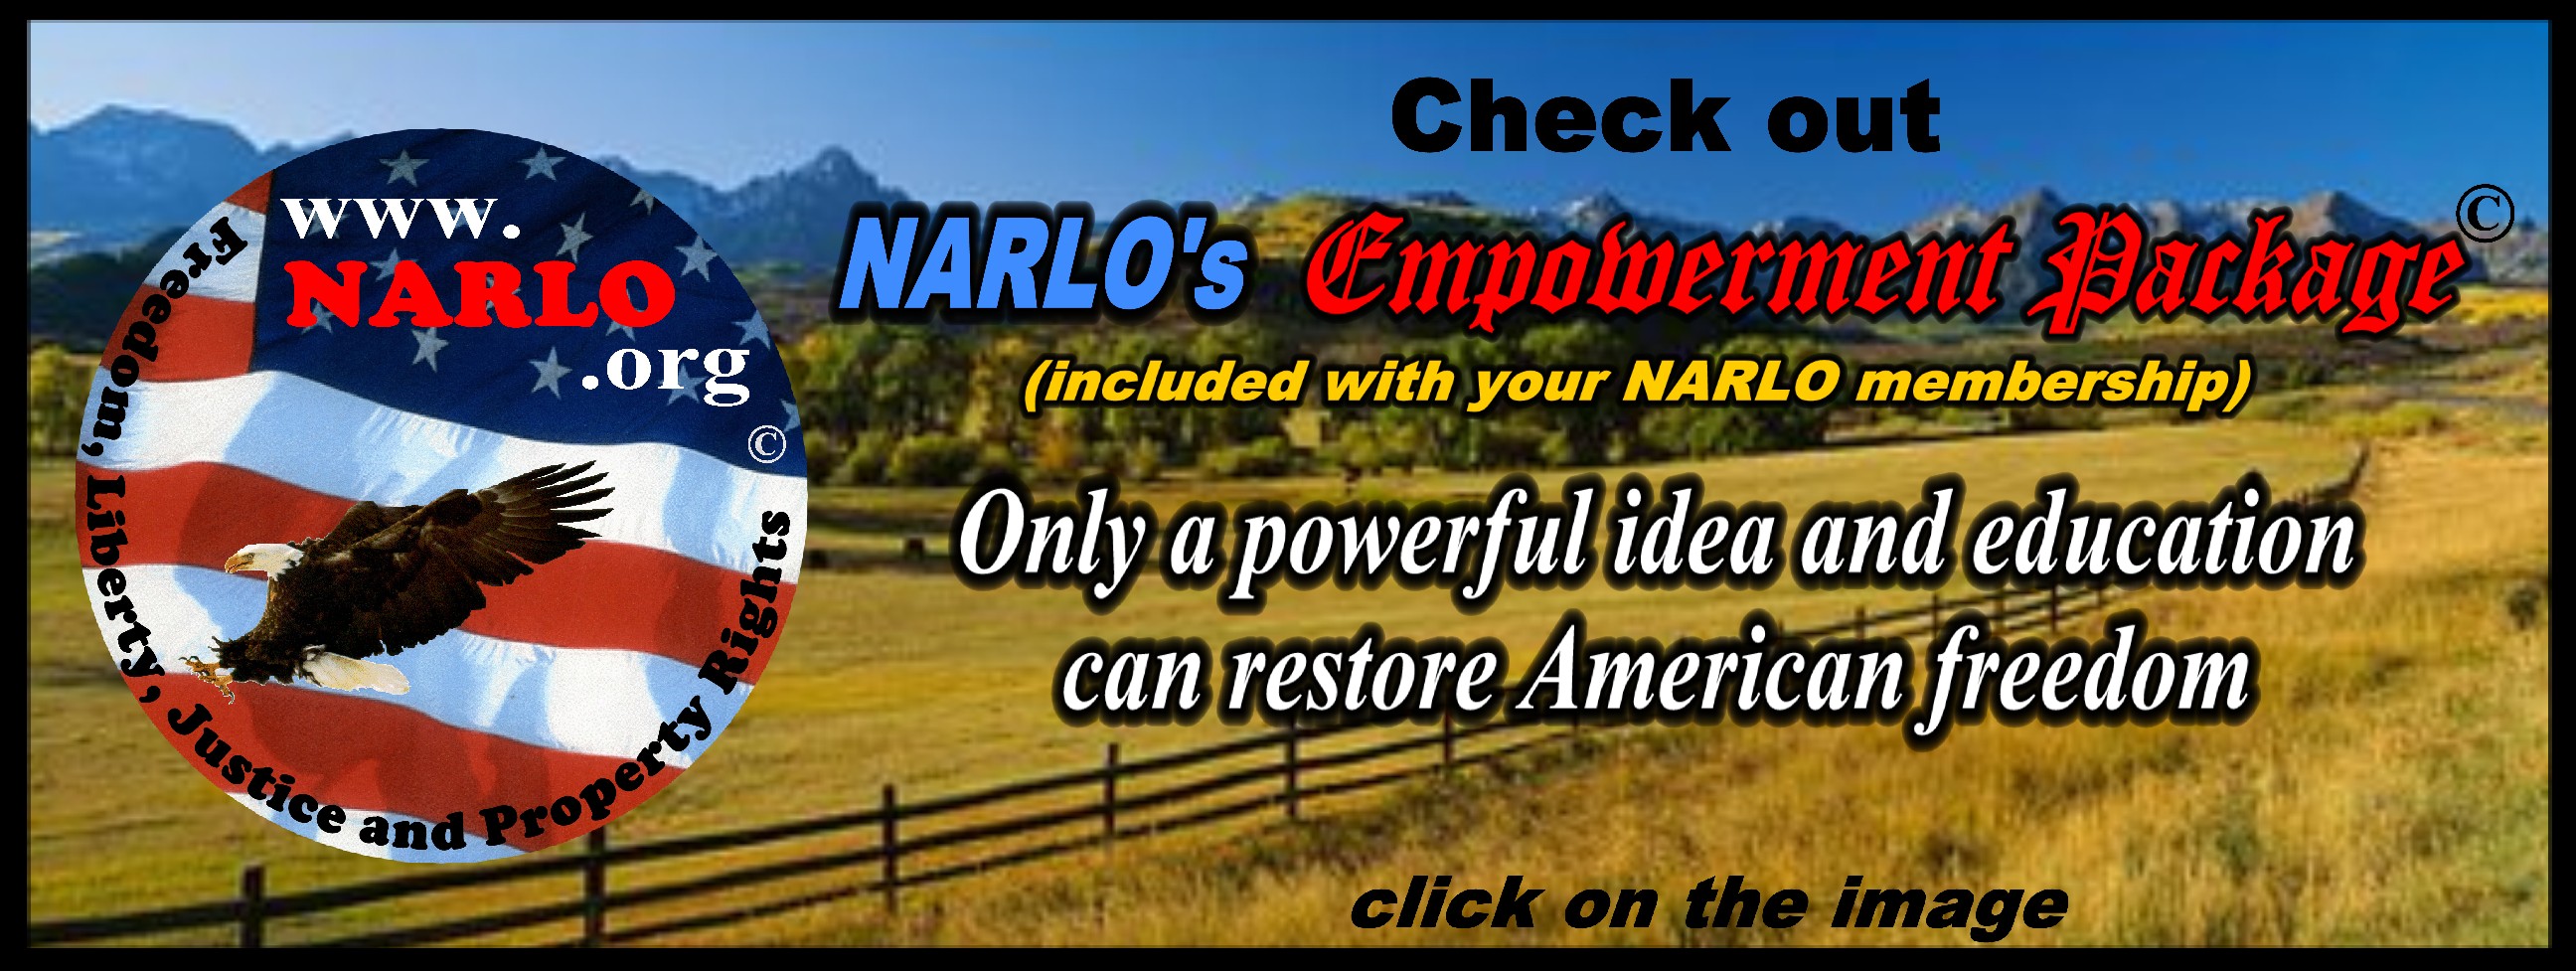 NARLO Empowerment Package